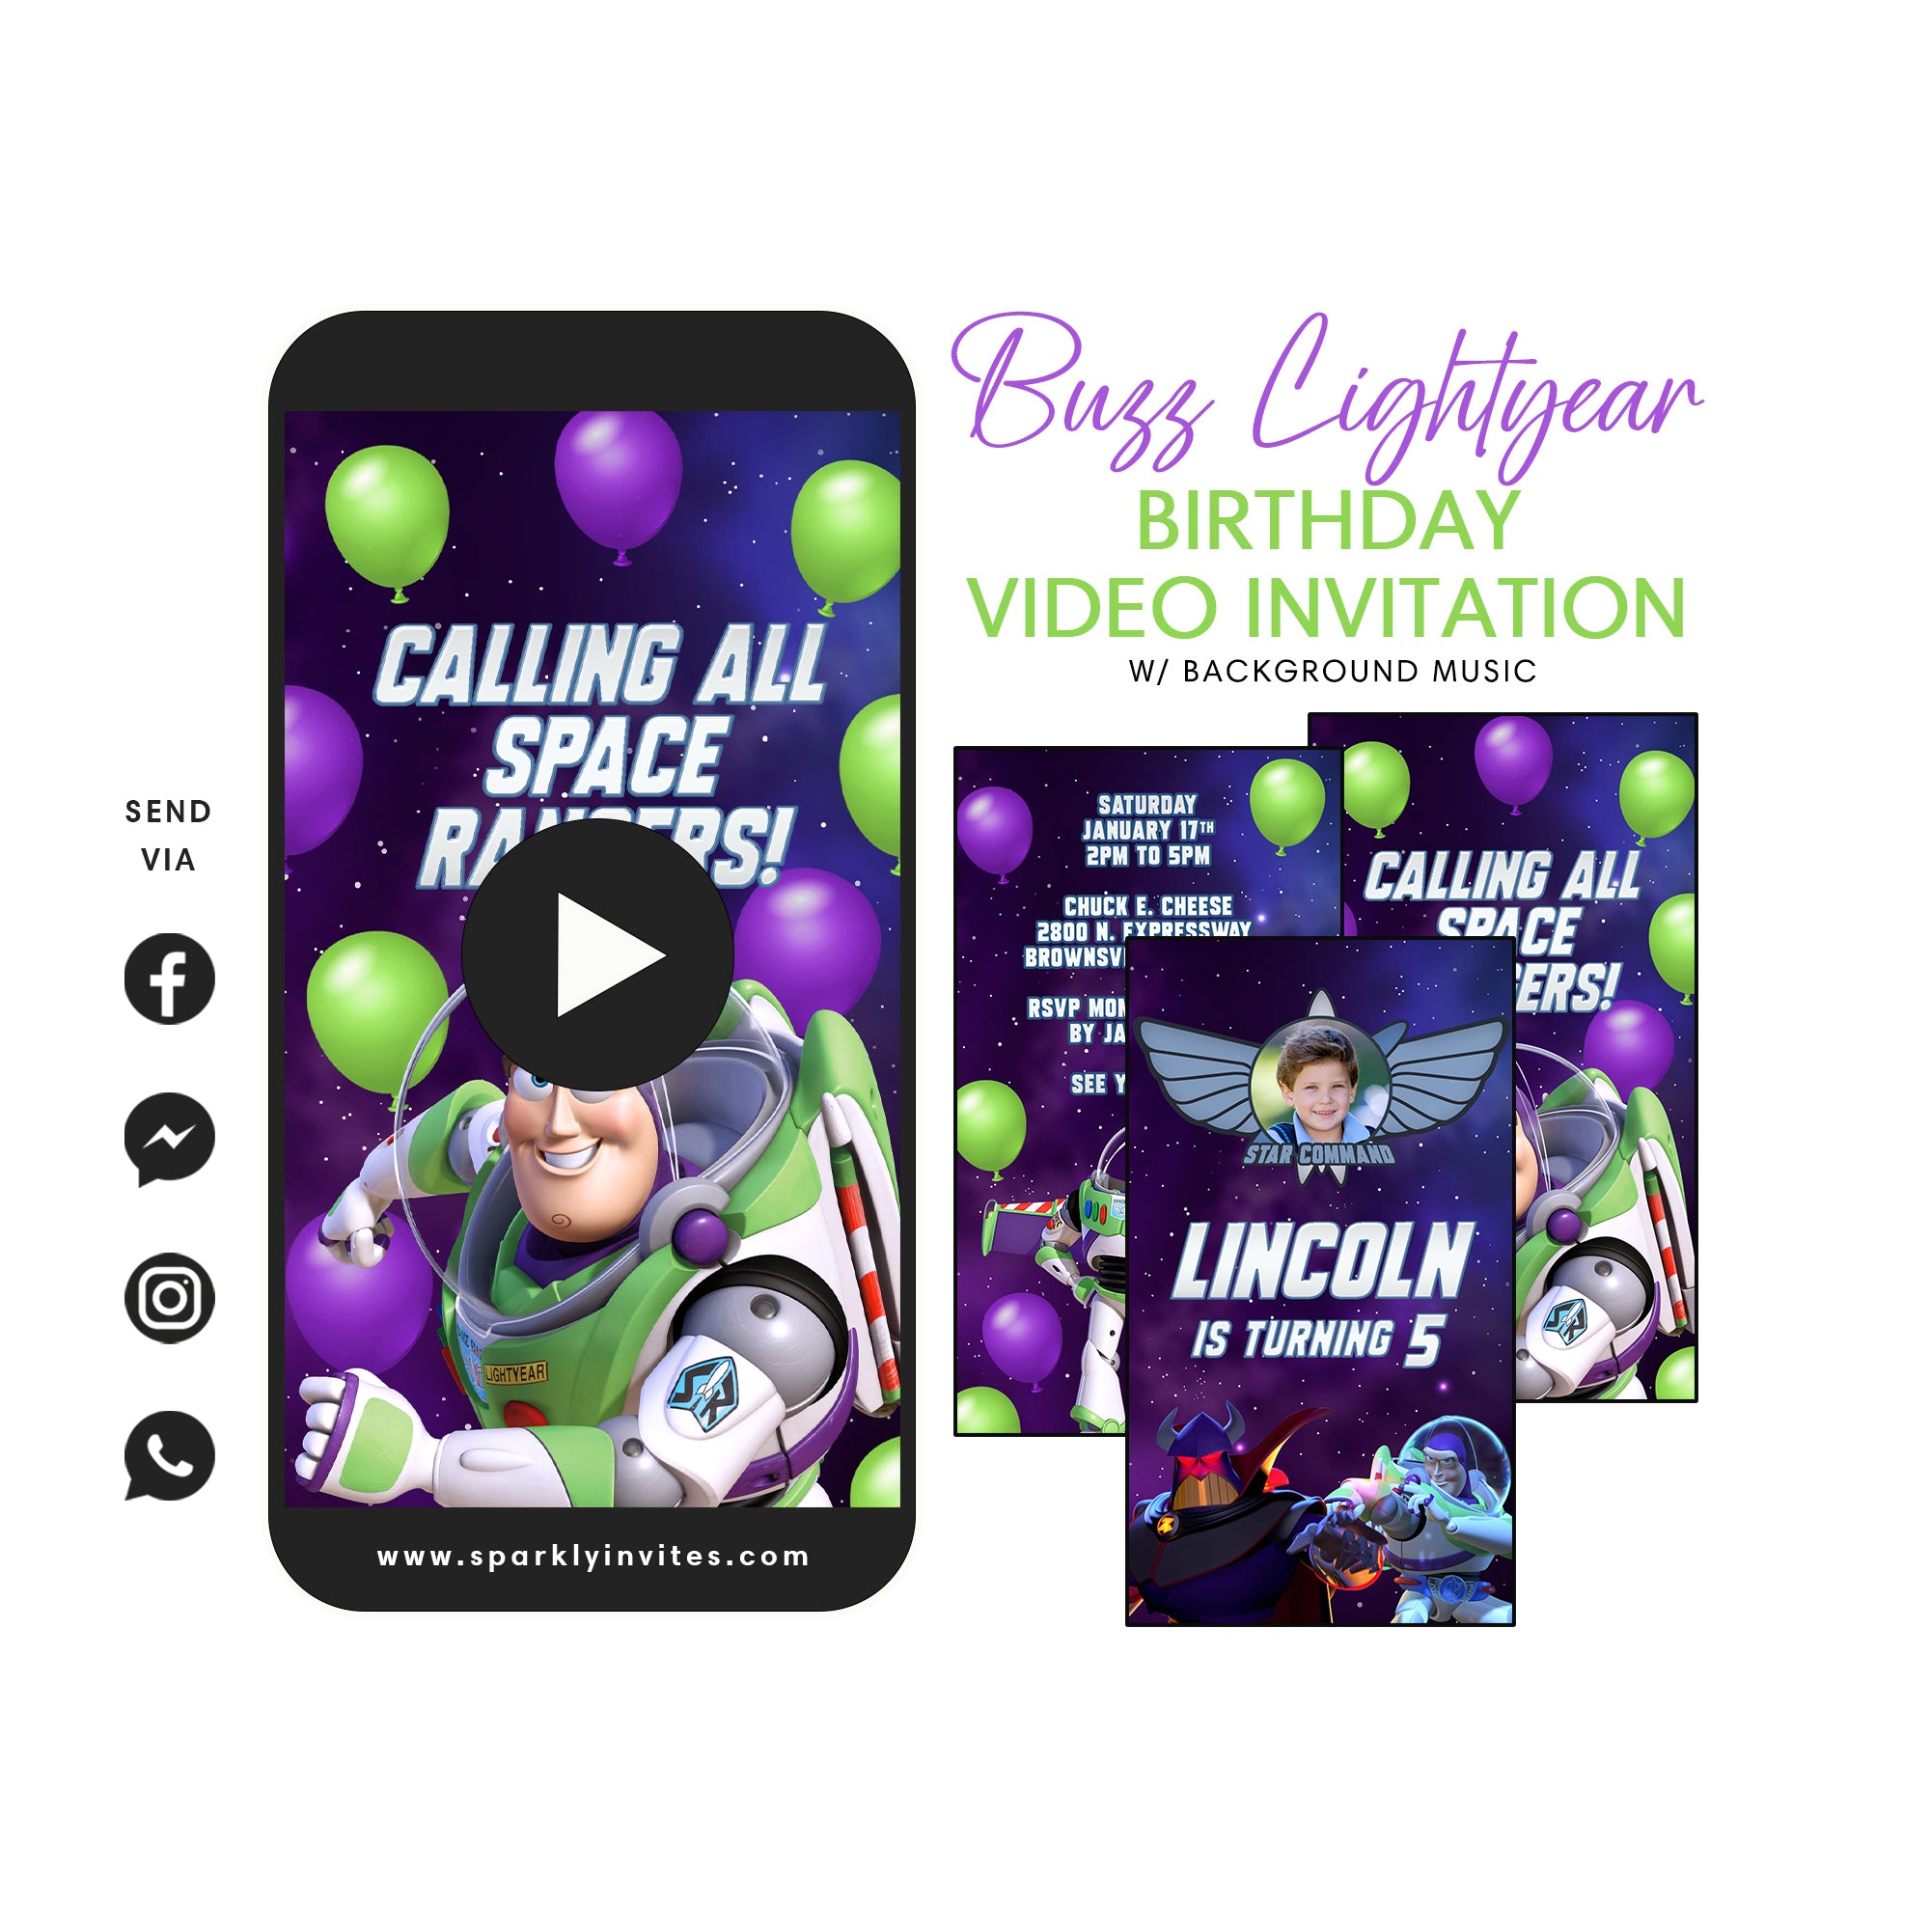 Buzz Lightyear Video Invitation